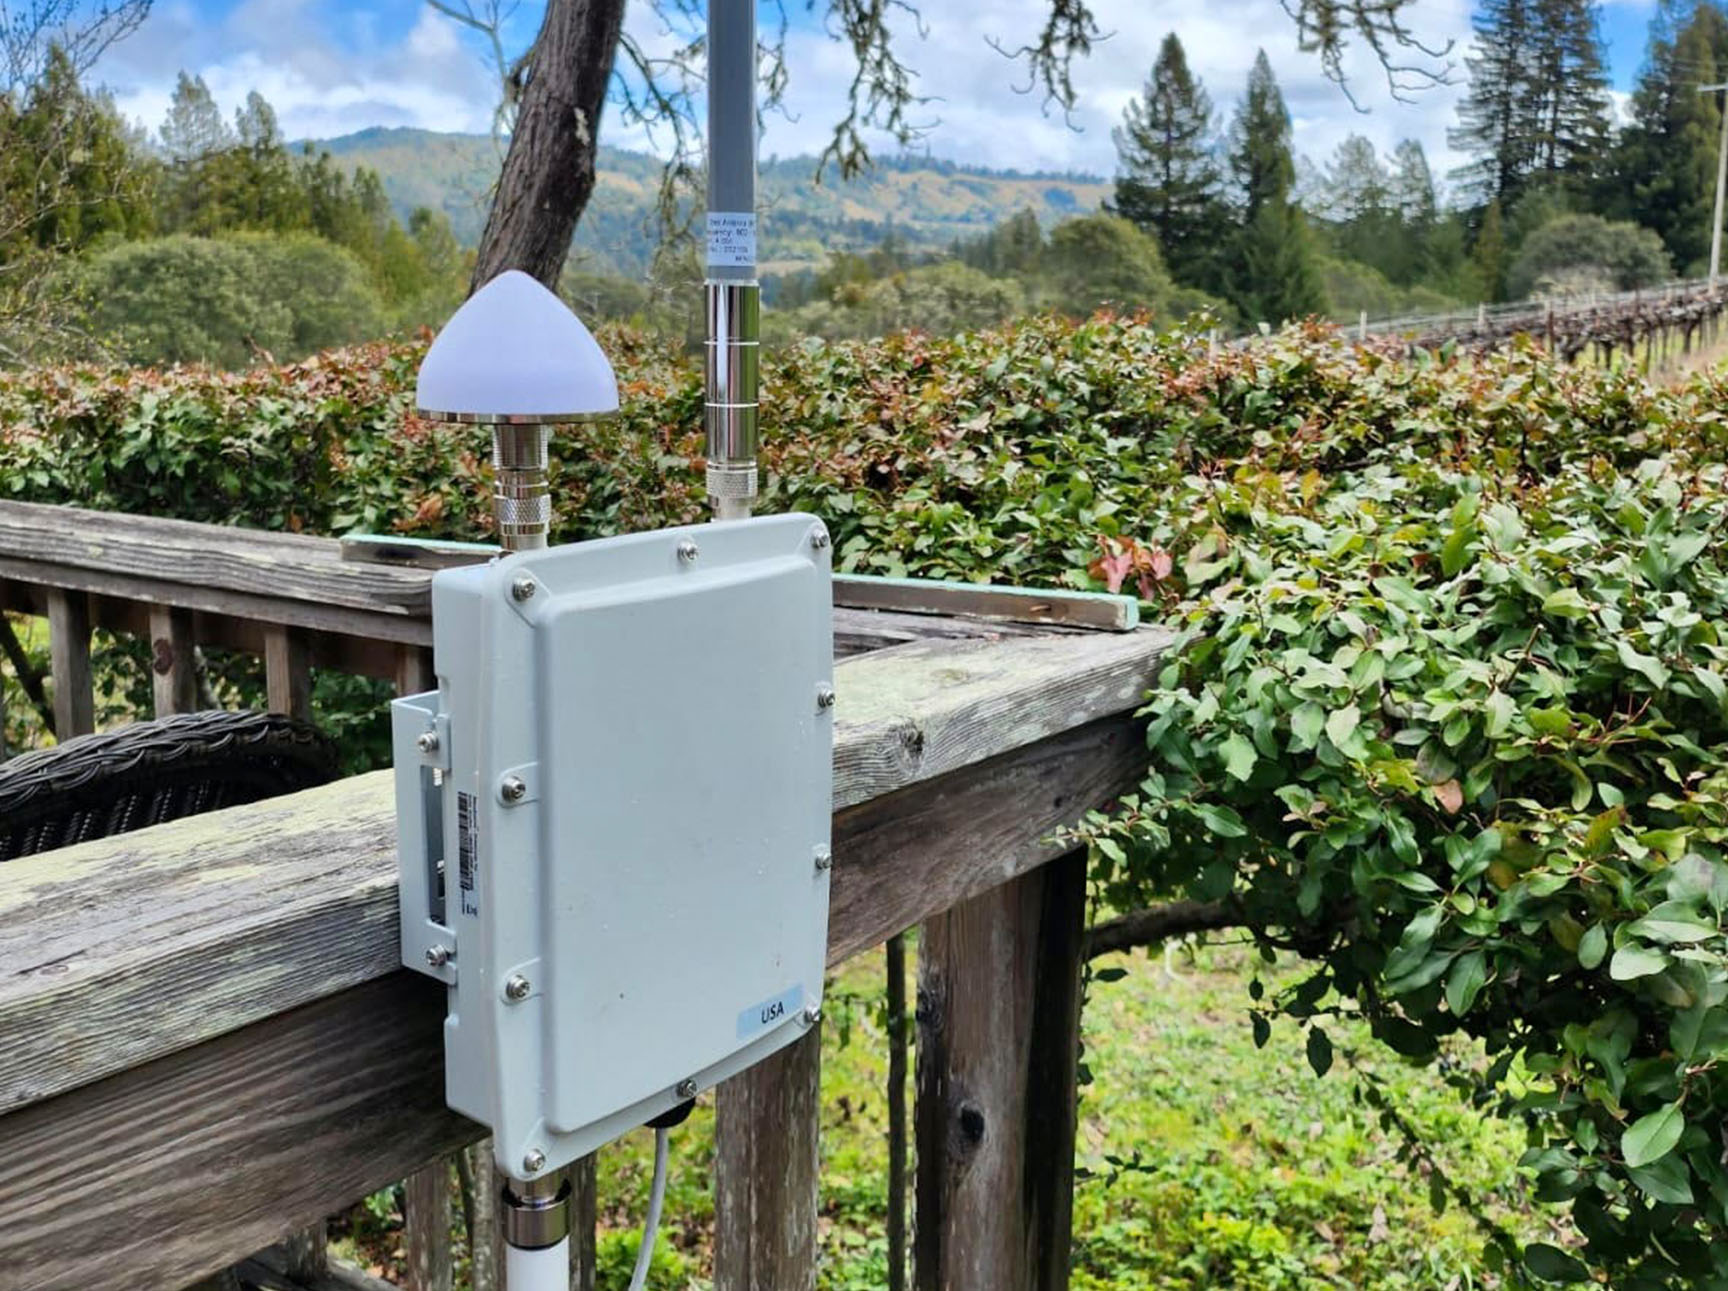 Wireless gateway transmitting data